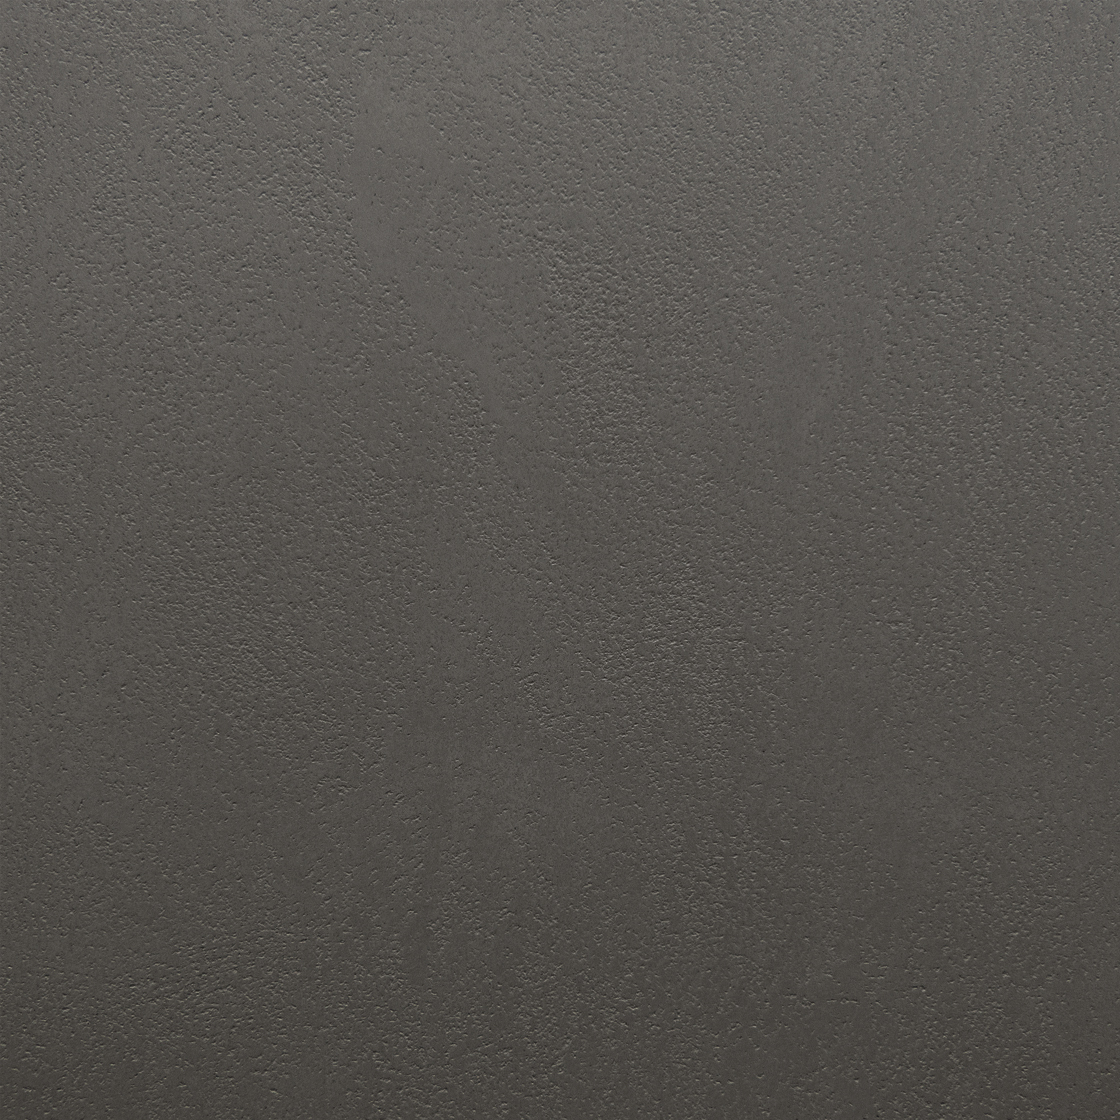 Close up of Armourcoat leatherstone exterior polished plaster finish - 42